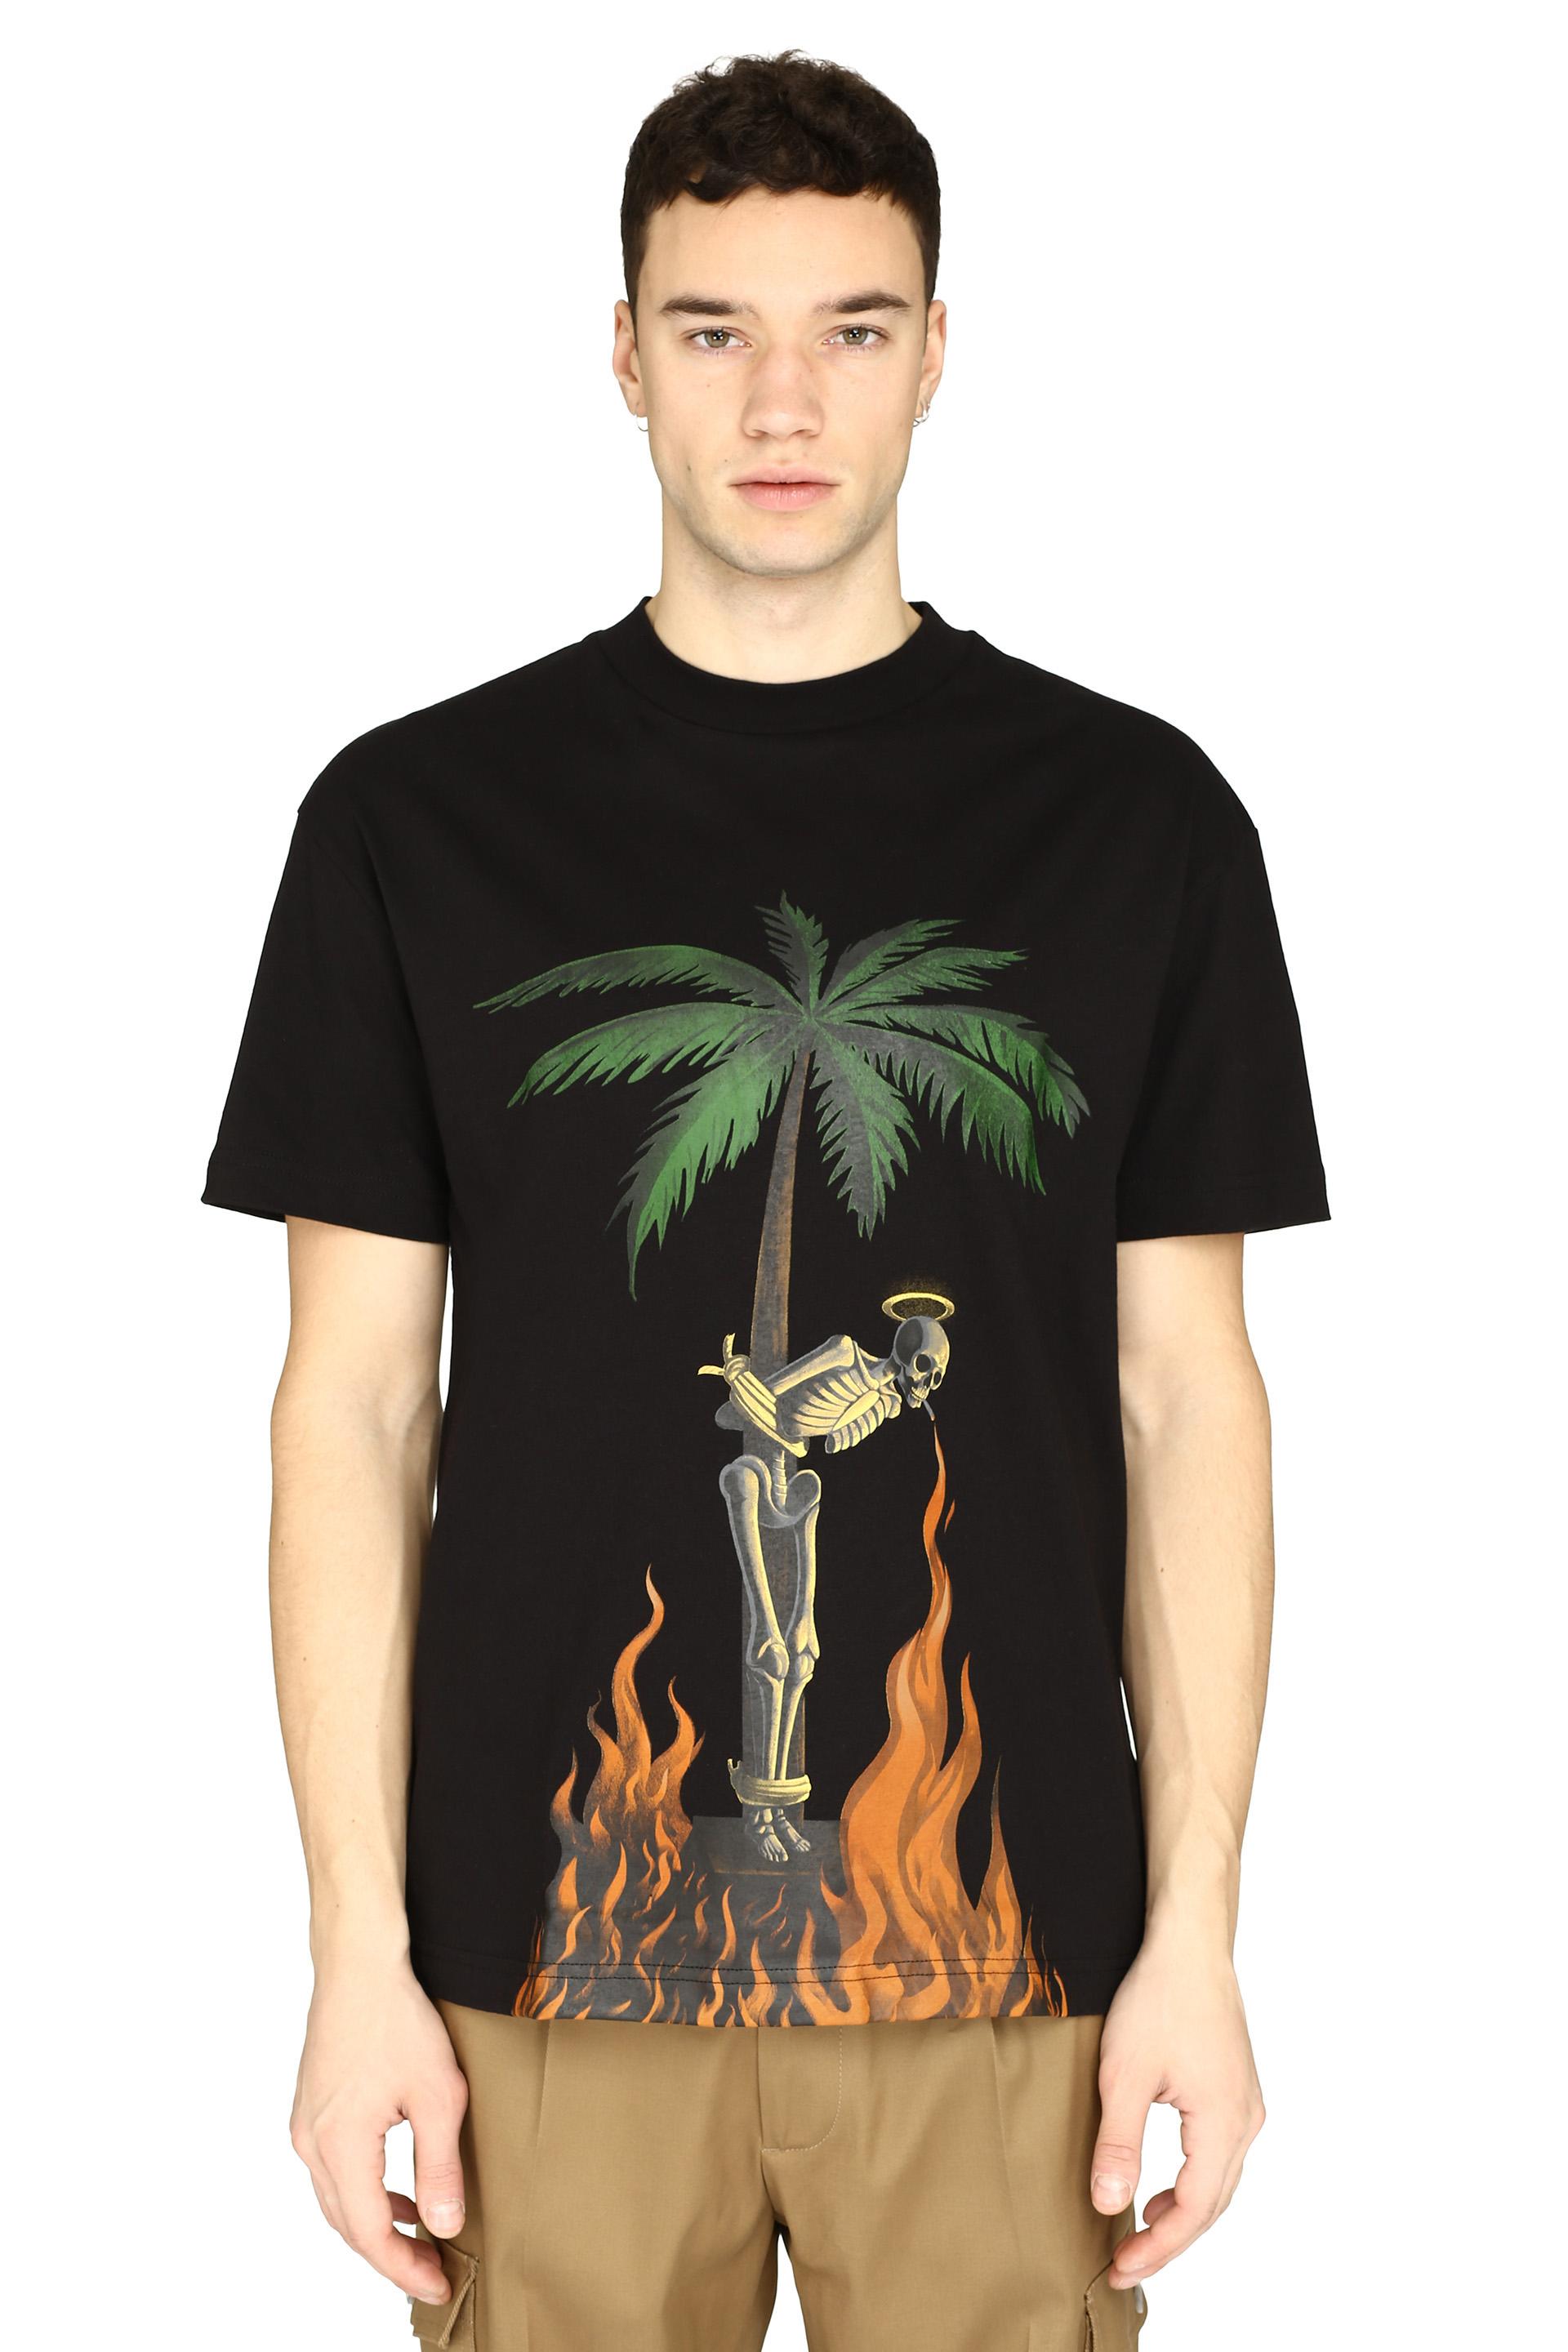 Palm Angels Burning Skeleton Cotton T-shirt in Black for Men - Lyst